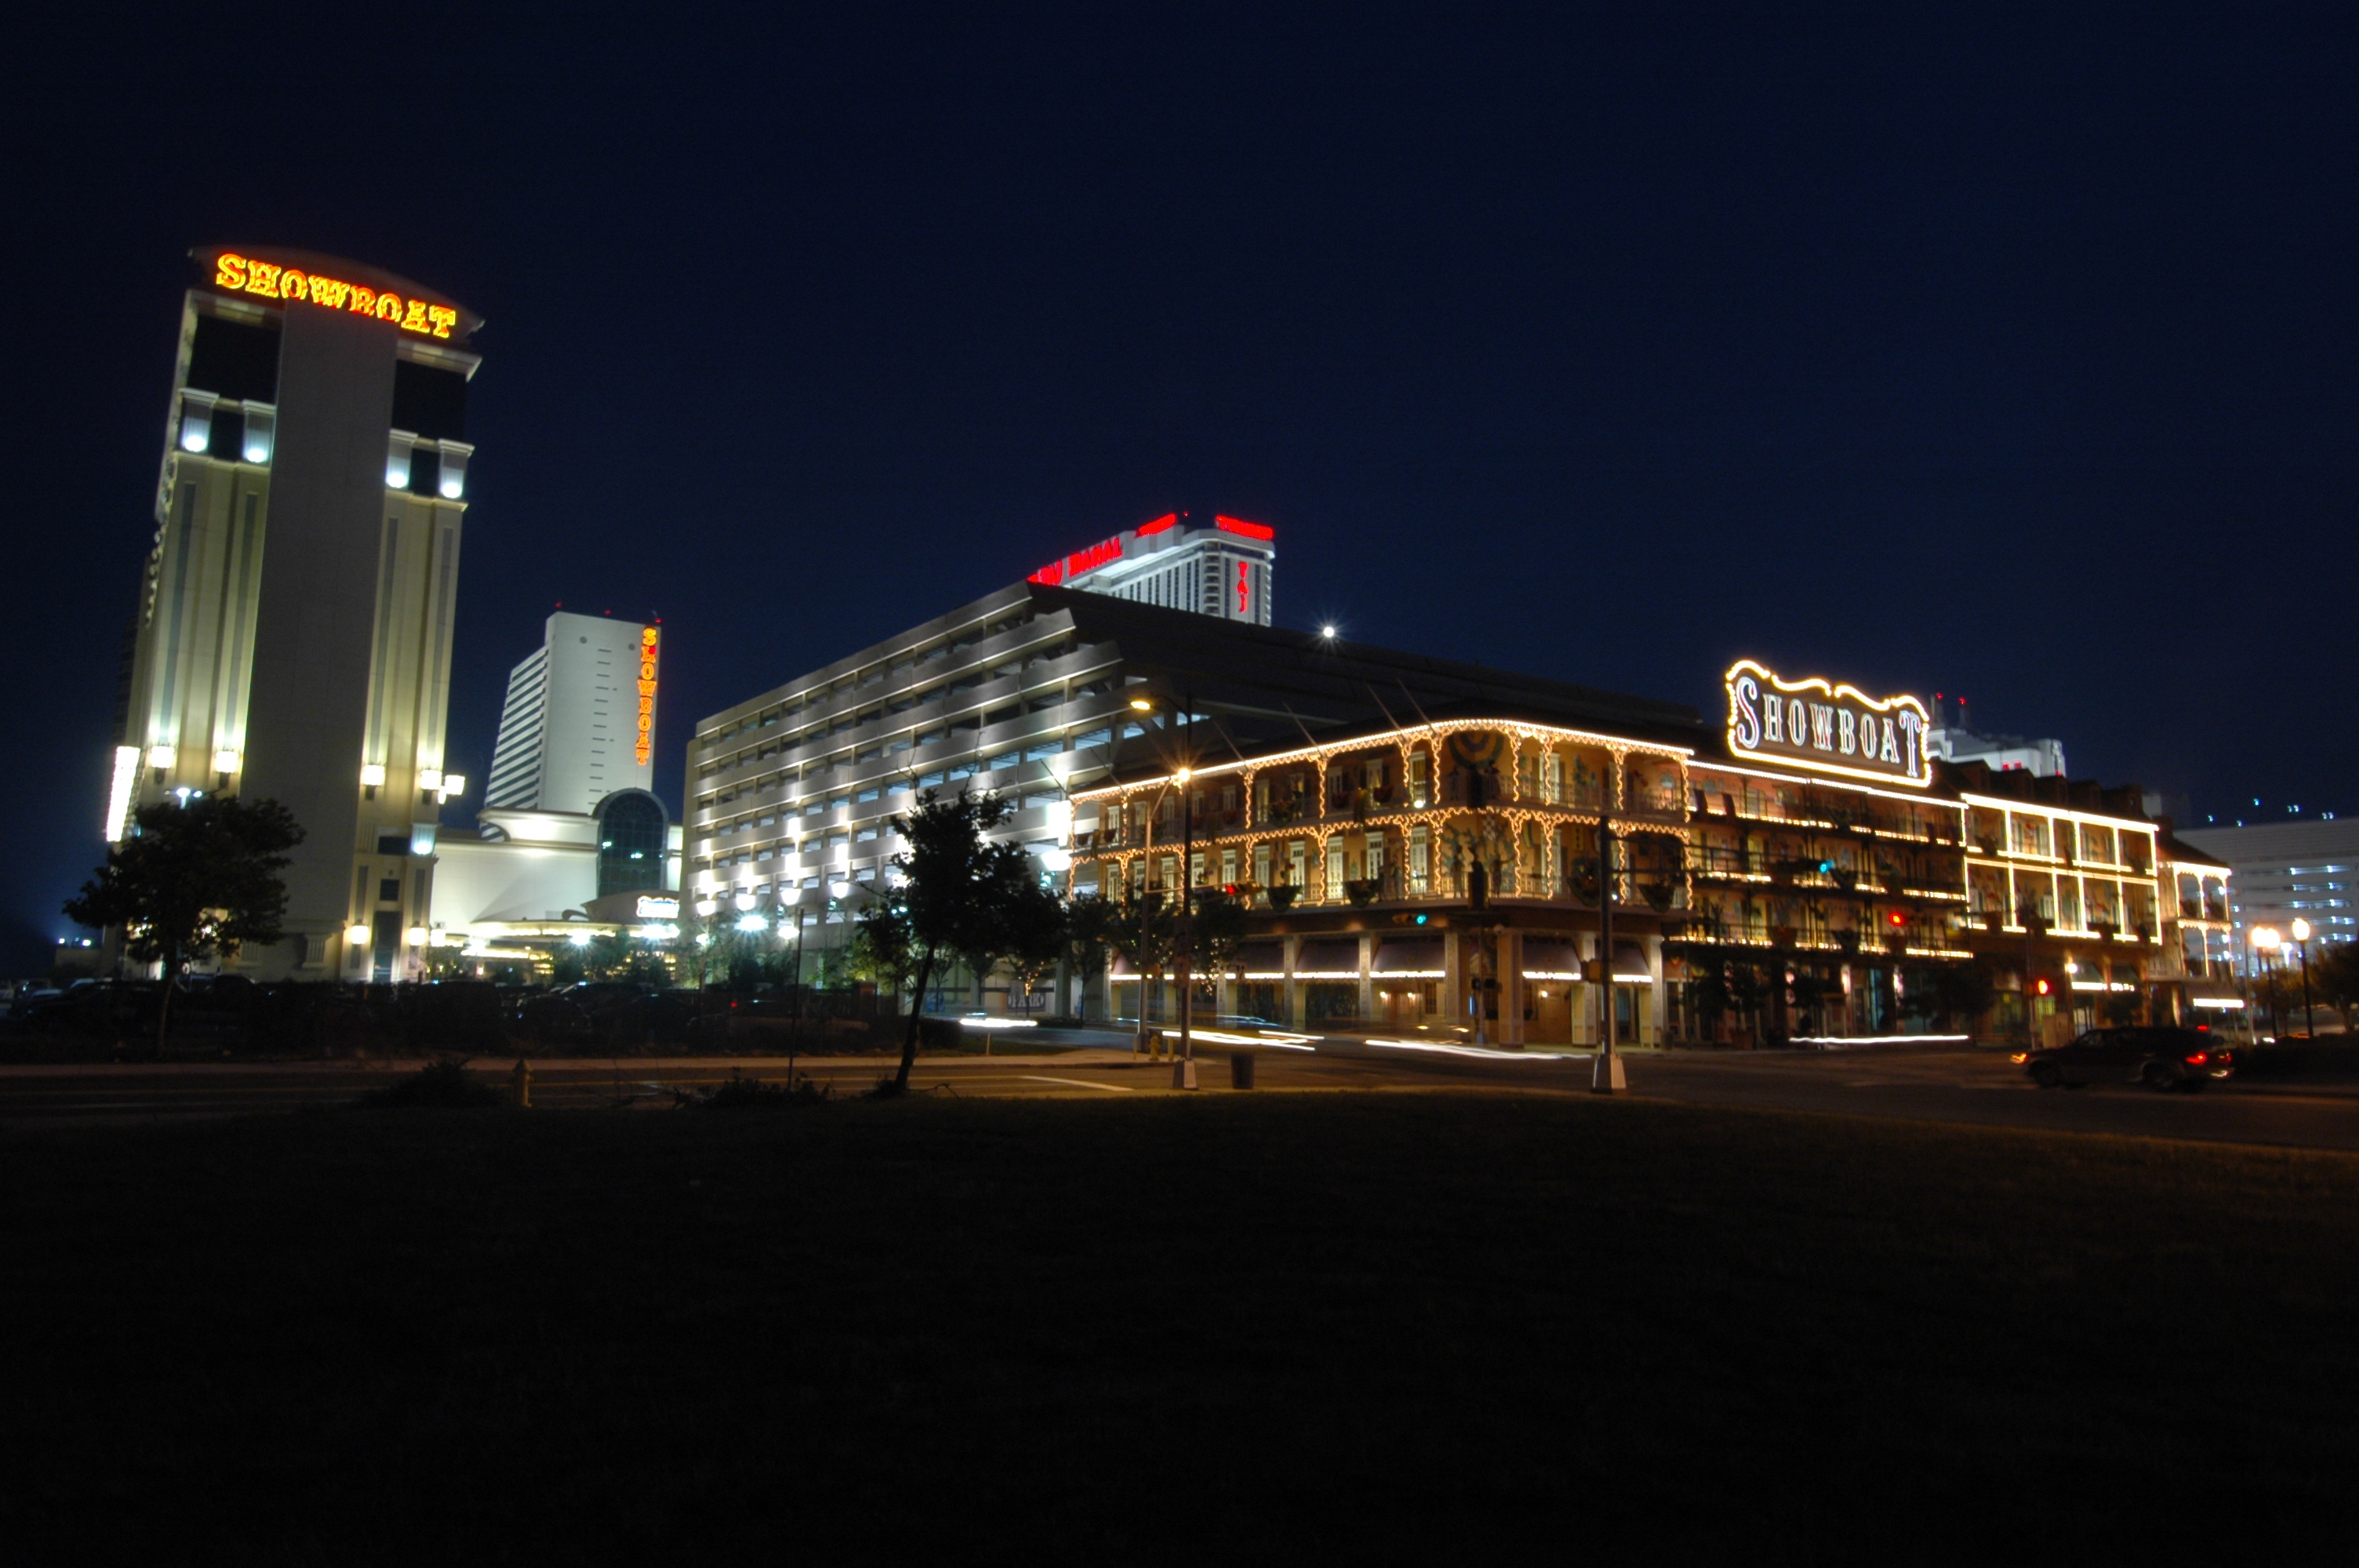 showboat casino hotel atlantic city nj